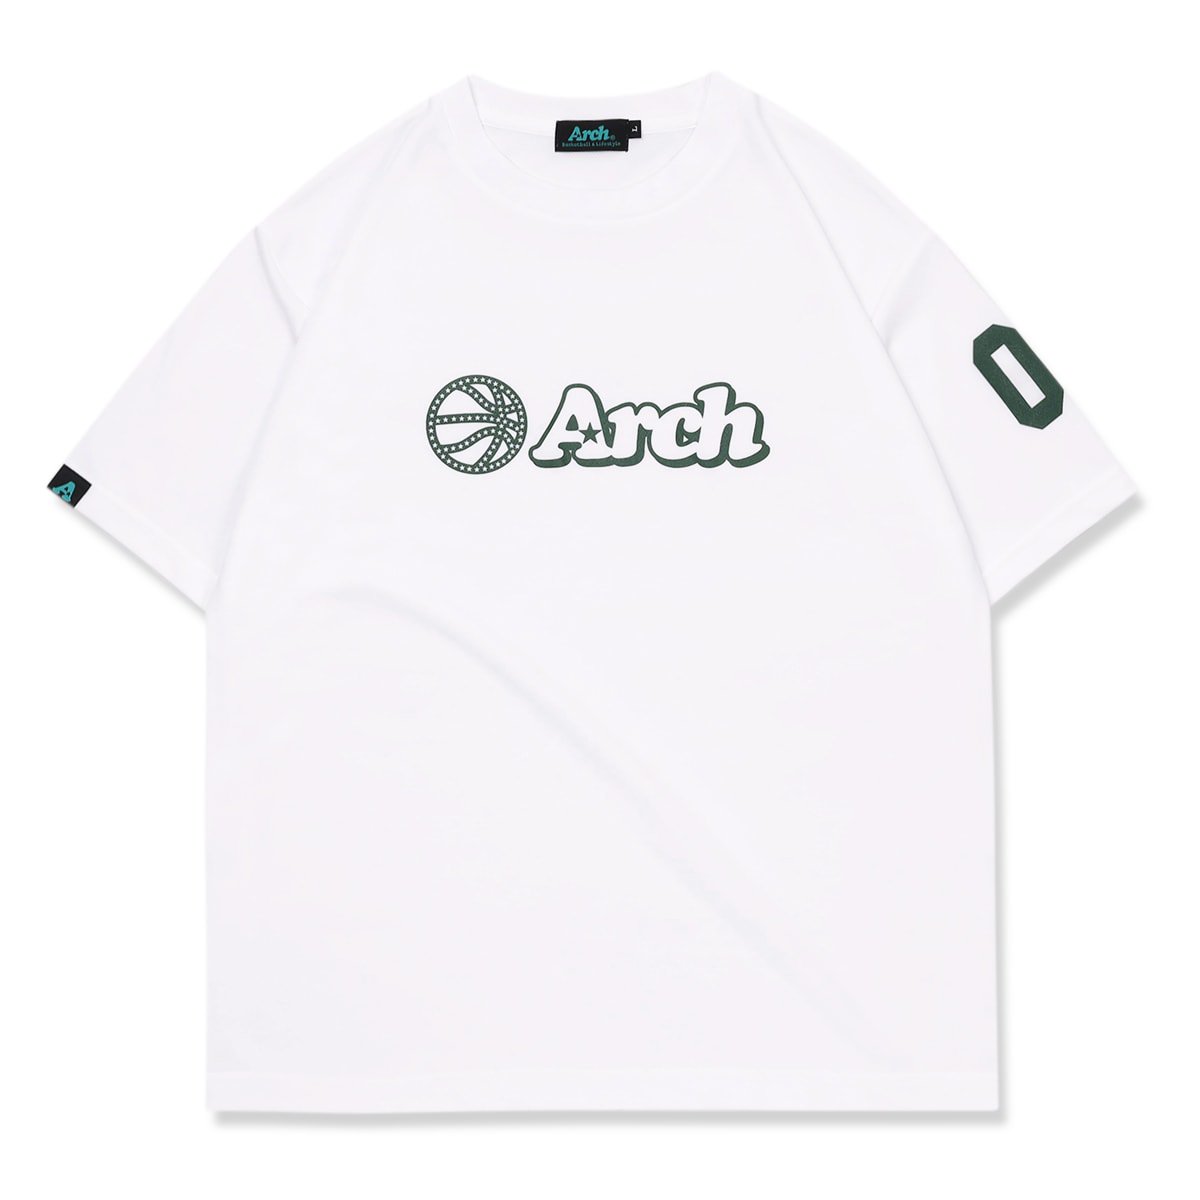 ball logo tee [DRY]【white/dark green】 - Arch ☆ アーチ 